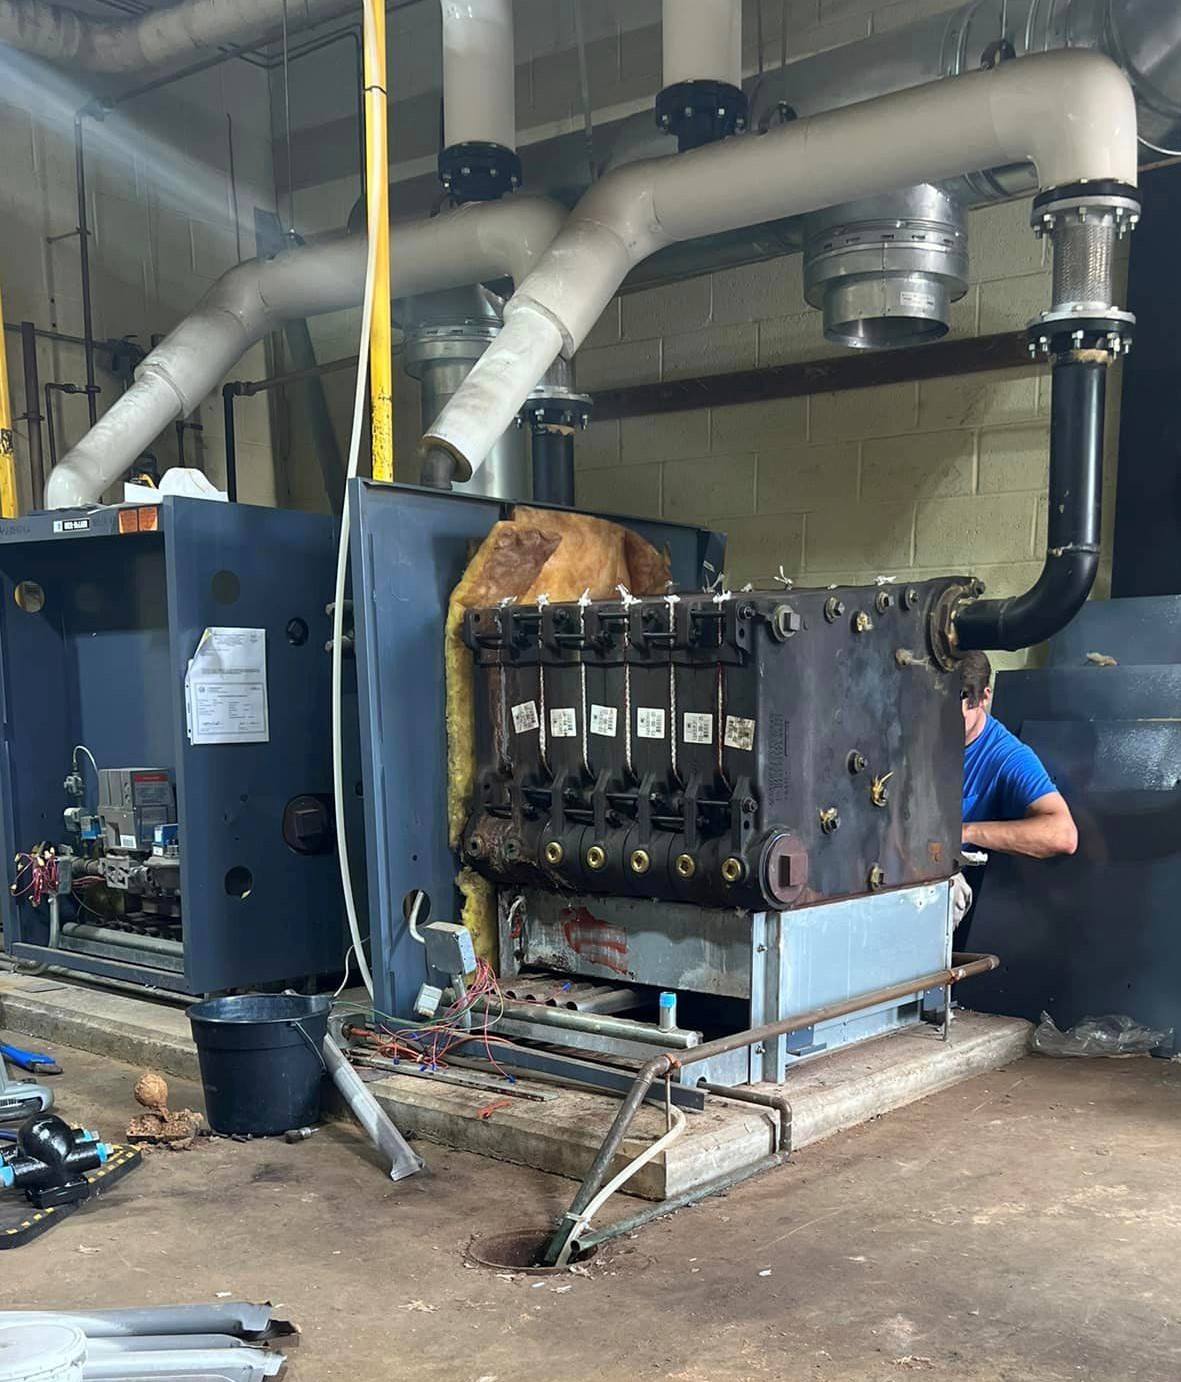 Watkins technician replacing heat exchanger on a commercial steam boiler